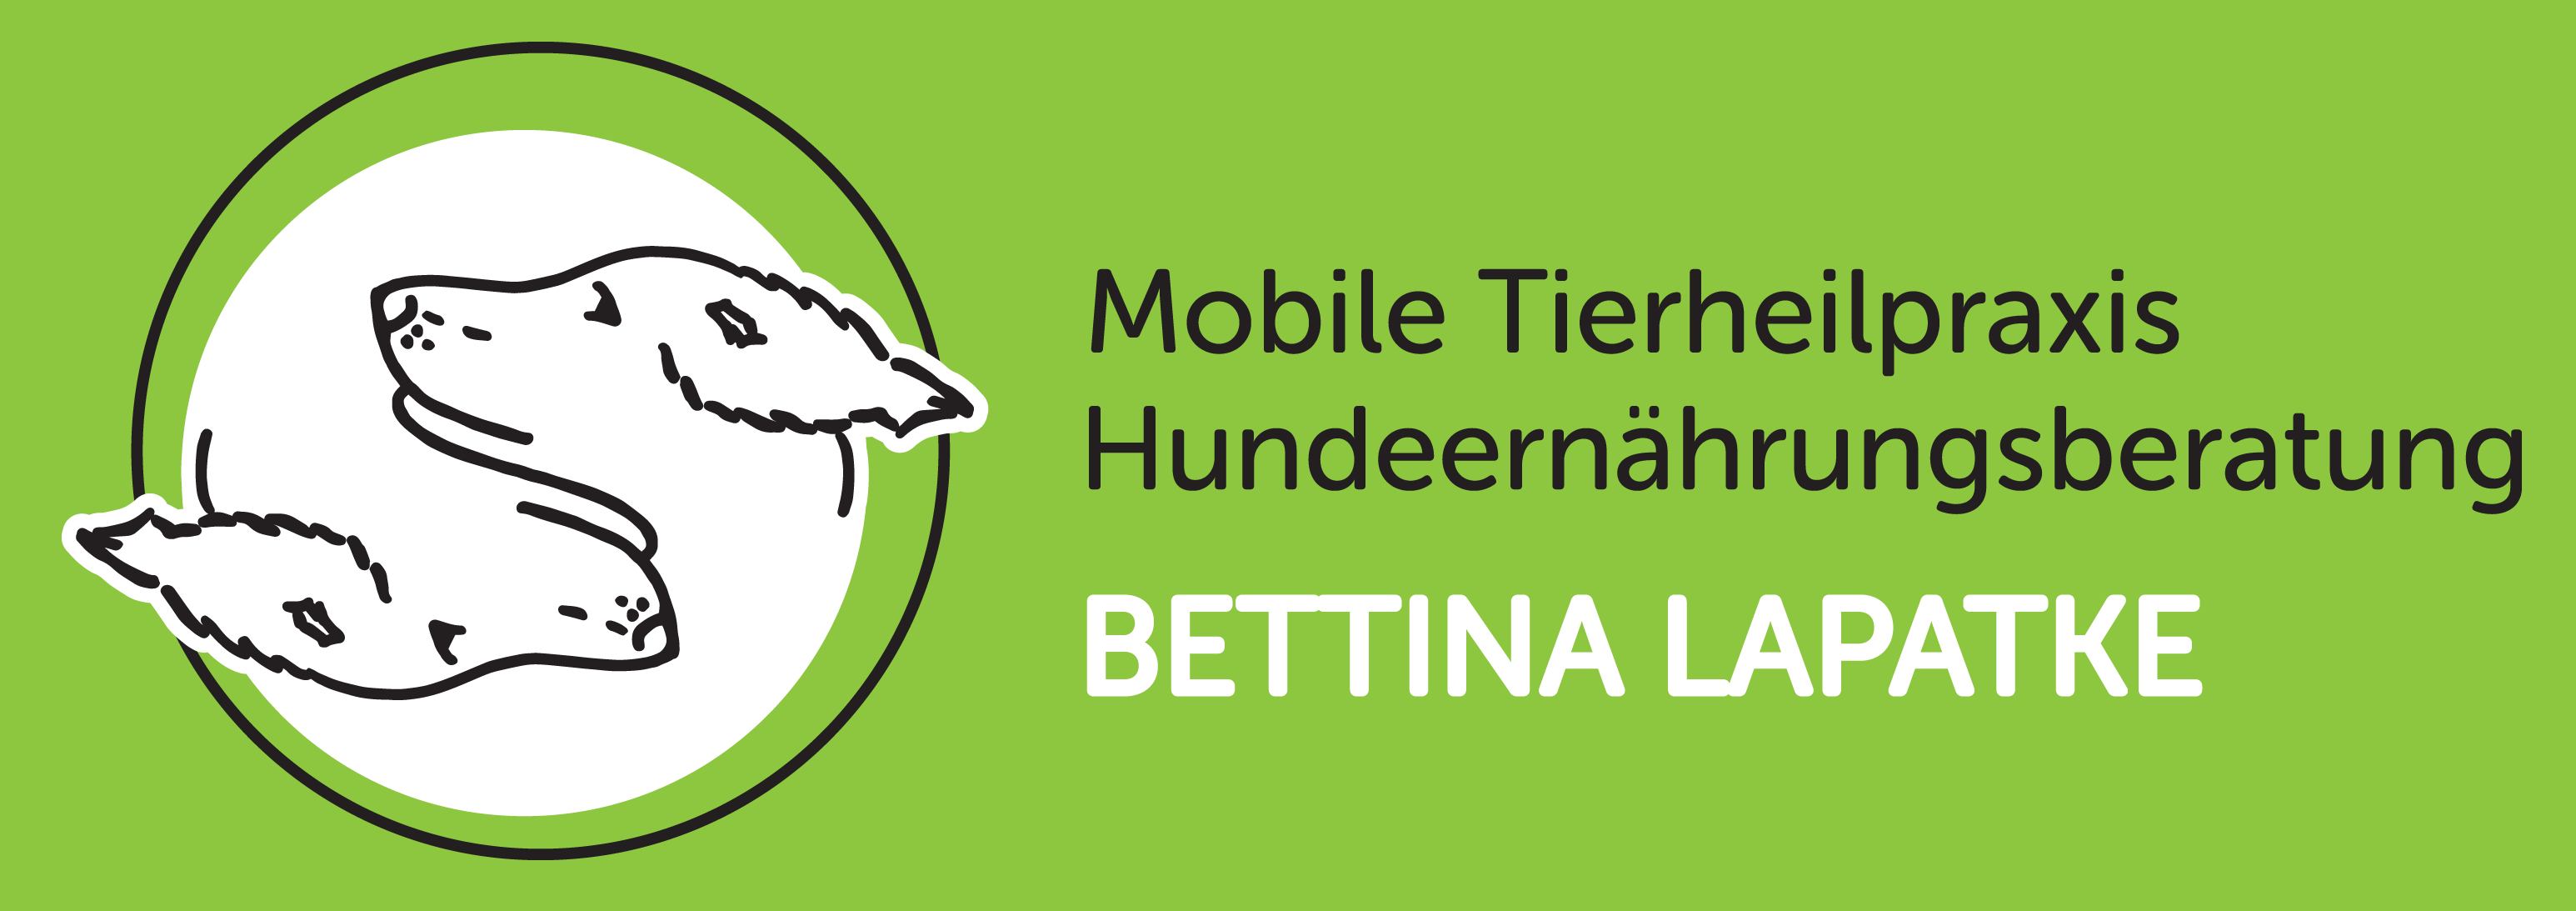 Mobile Tierheilpraxis & Hundeernährungsberatung Bettina Lapatke